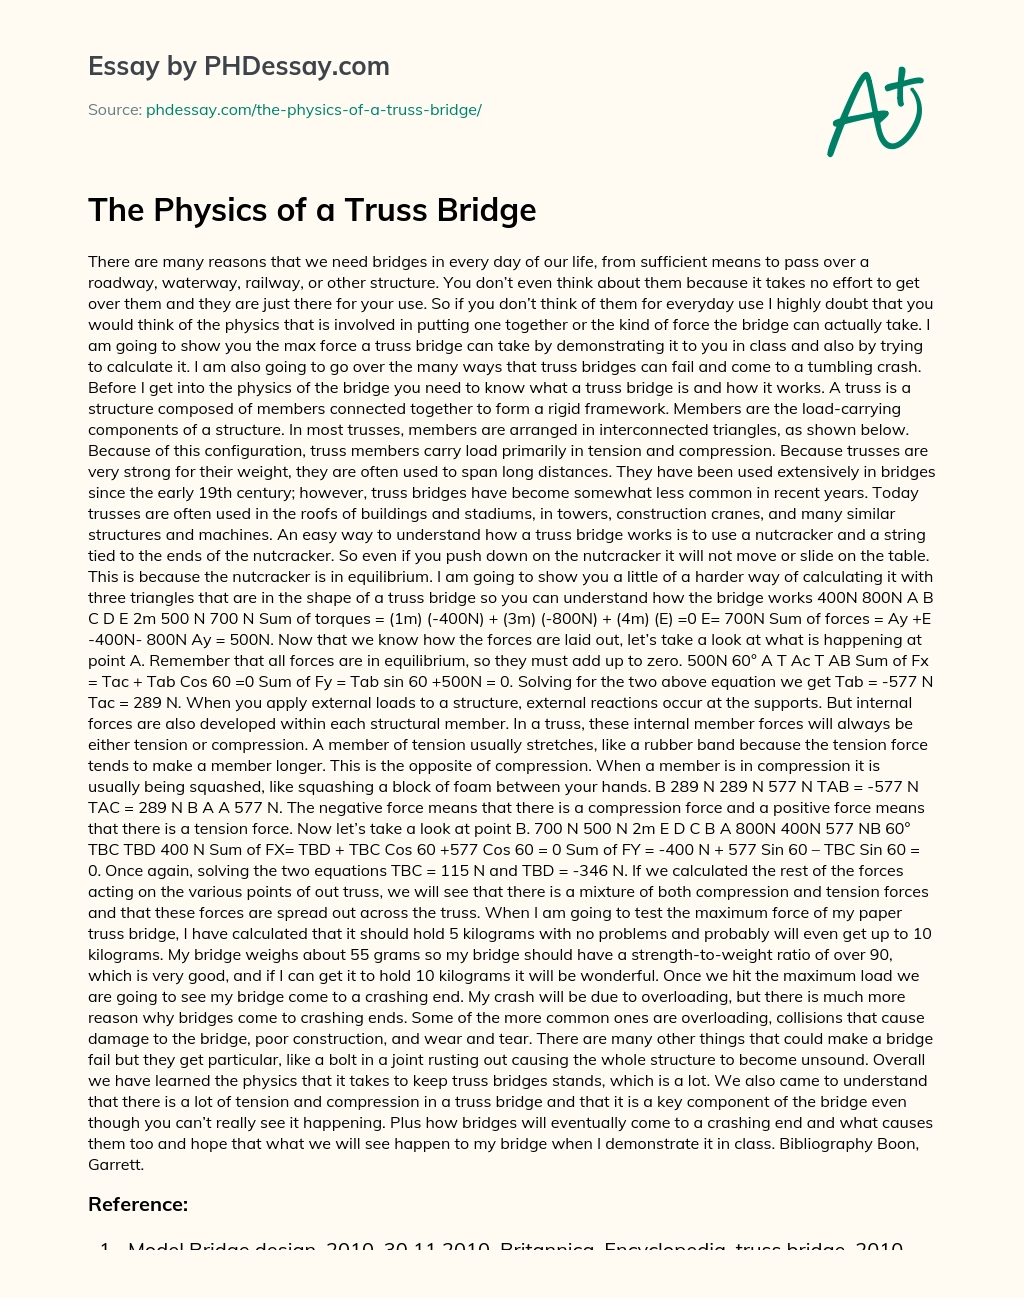 The Physics of a Truss Bridge essay